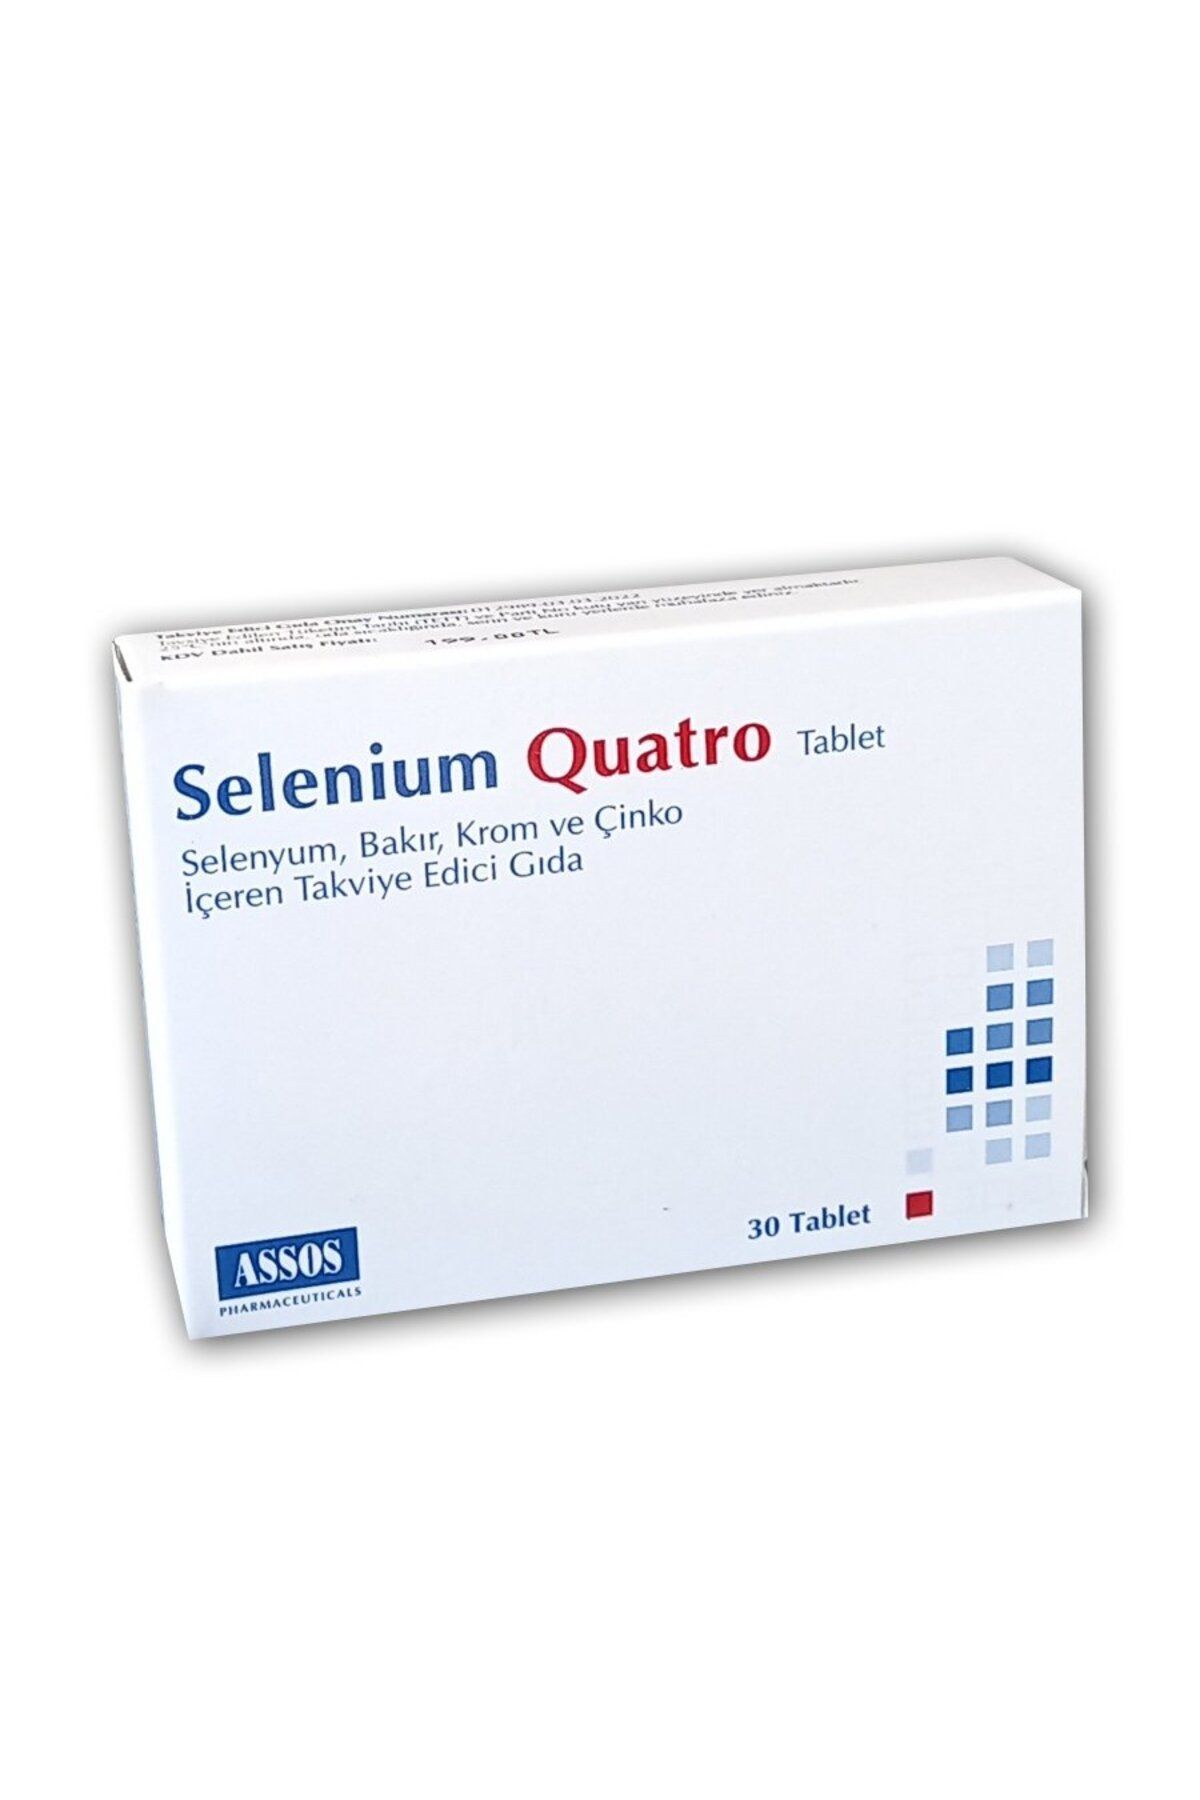 Assos Selenium Quatro 30 Tablet